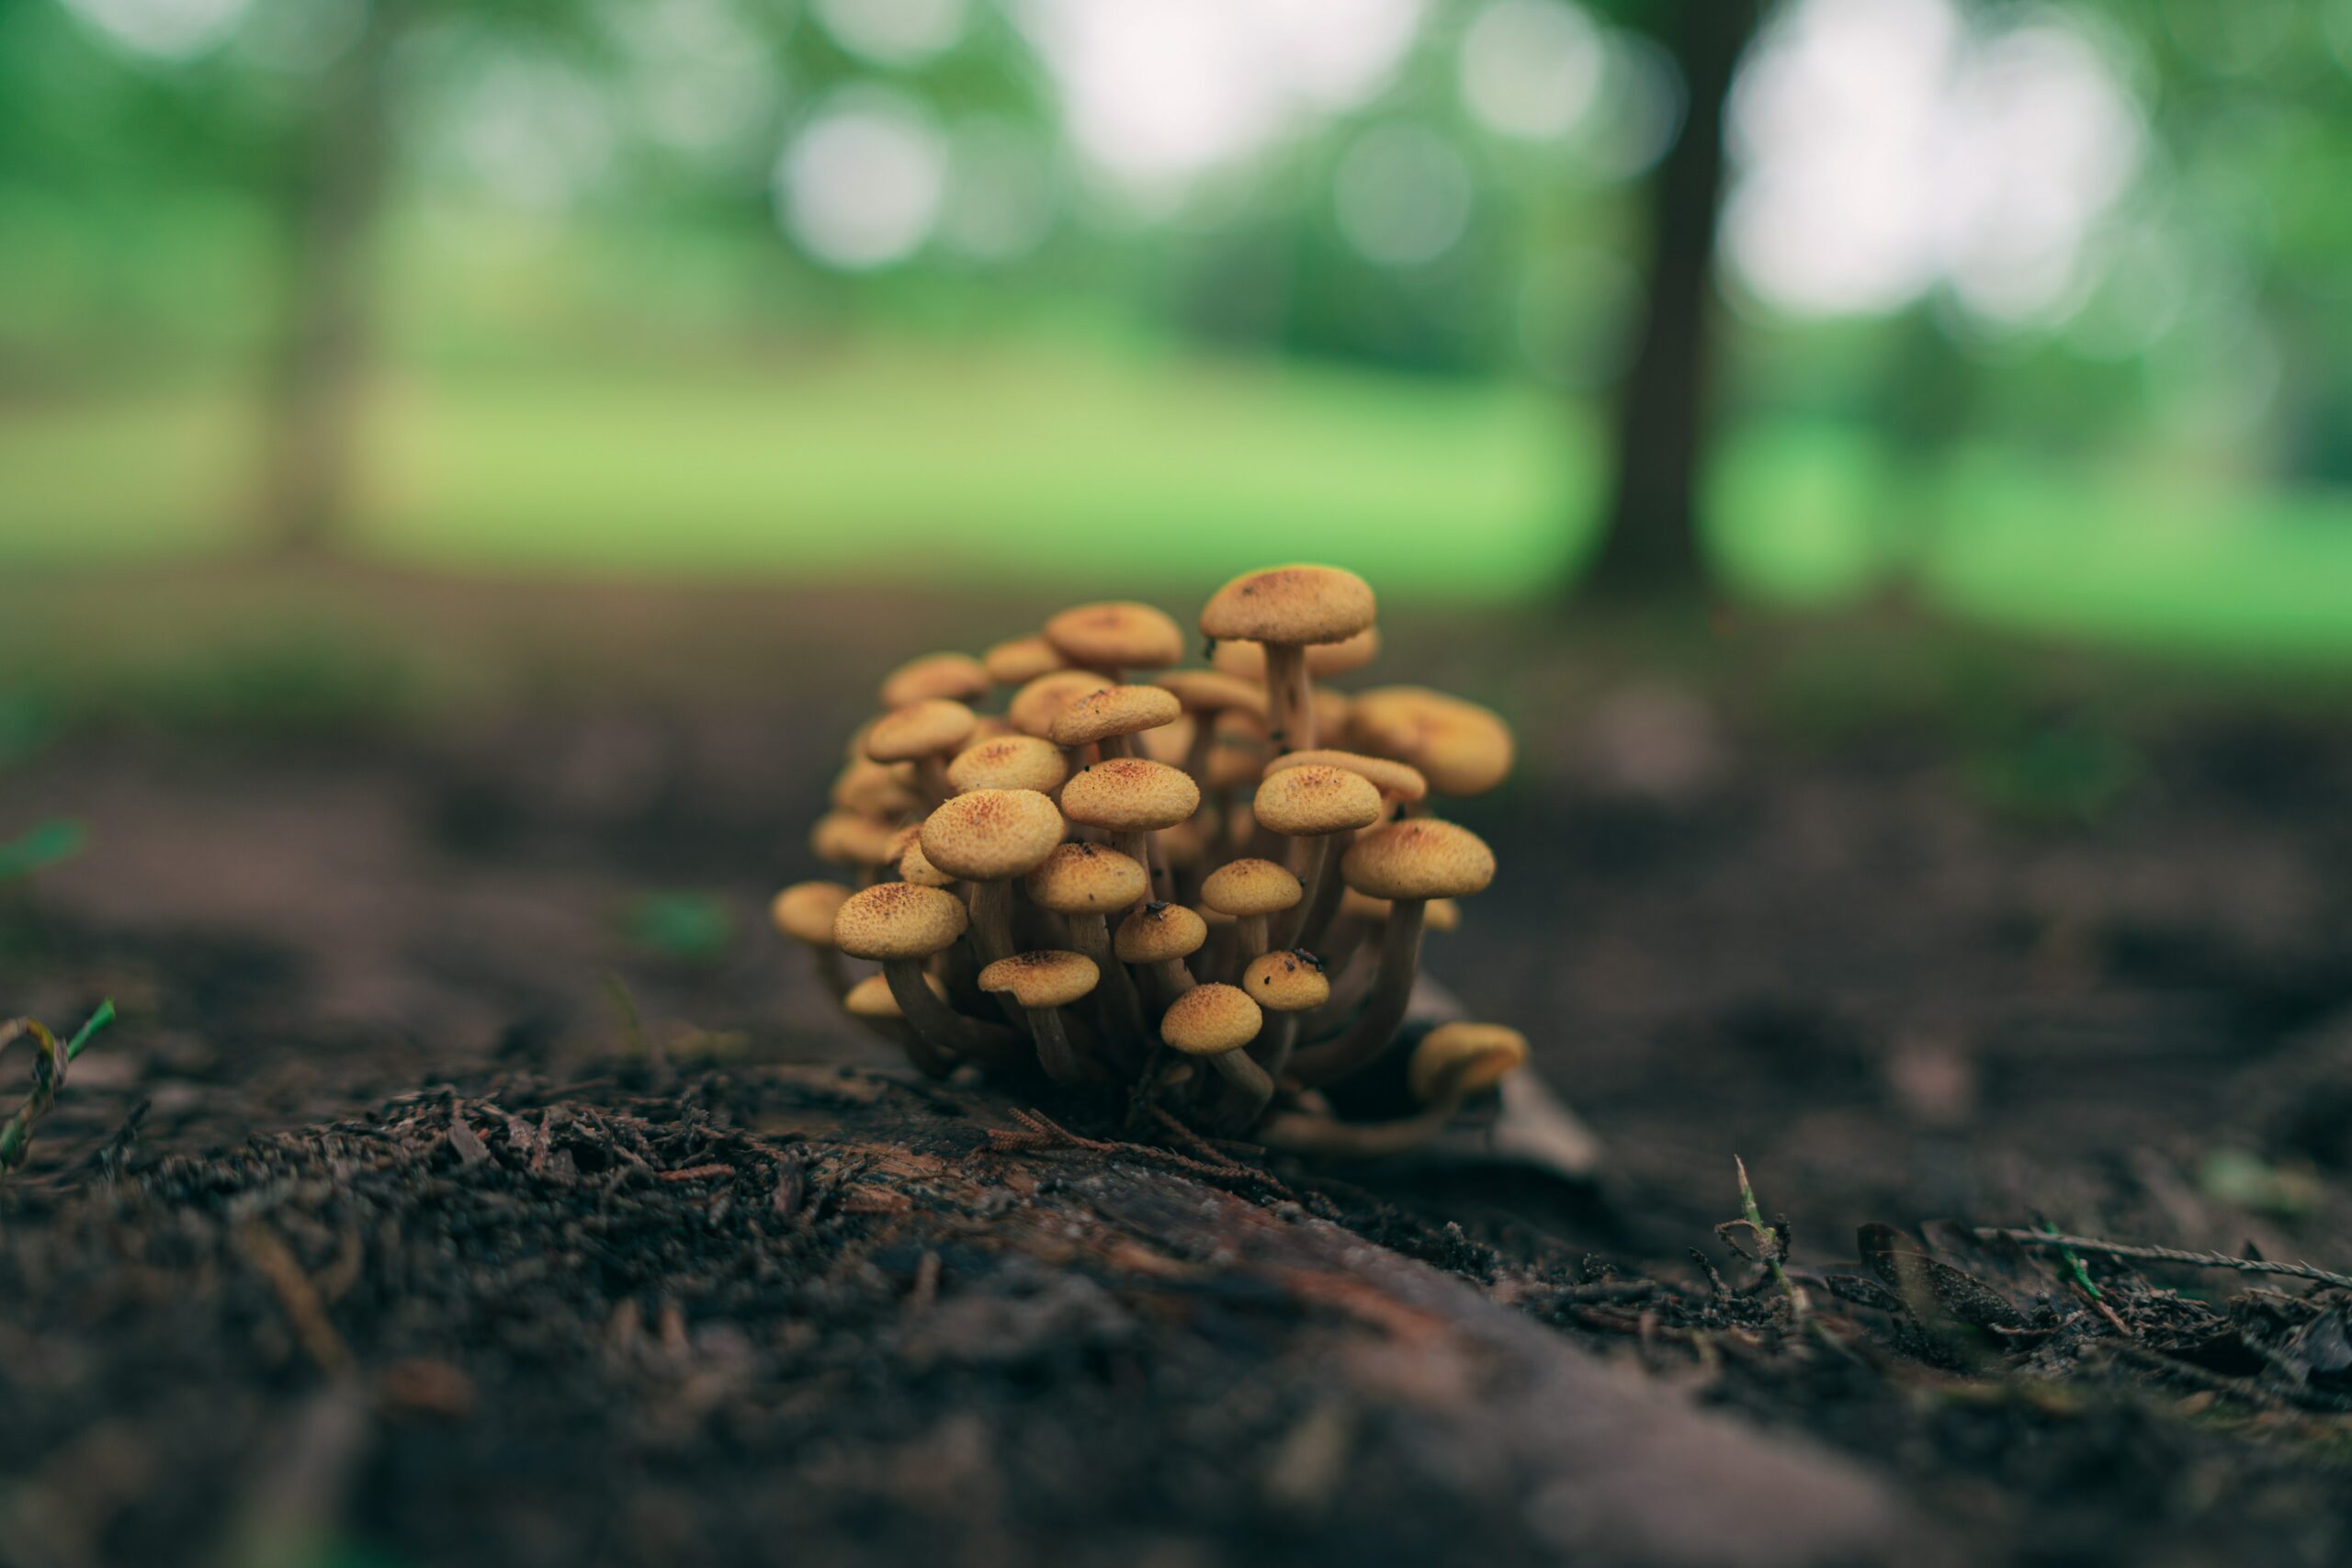 clump of mushrooms on a log